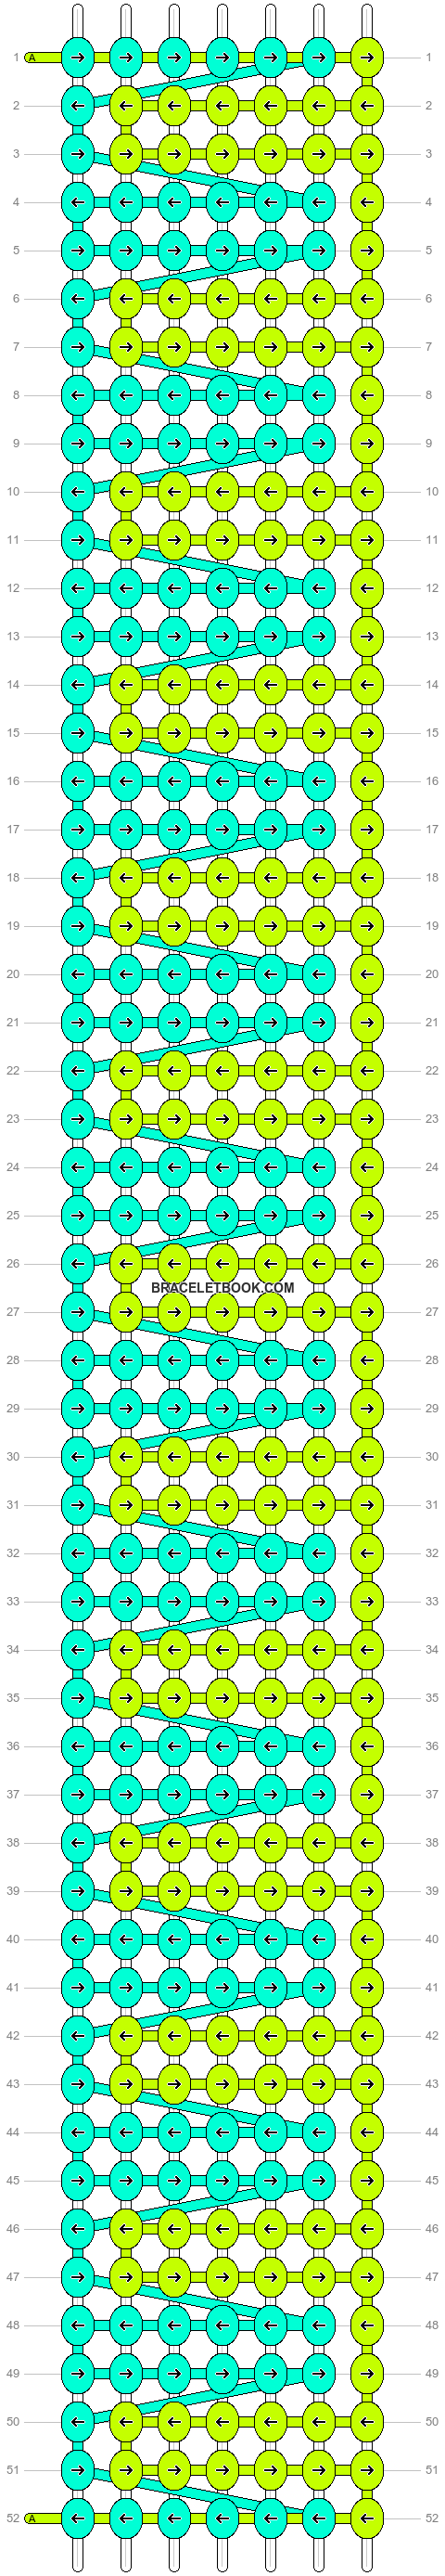 Alpha pattern #15234 variation #145922 pattern